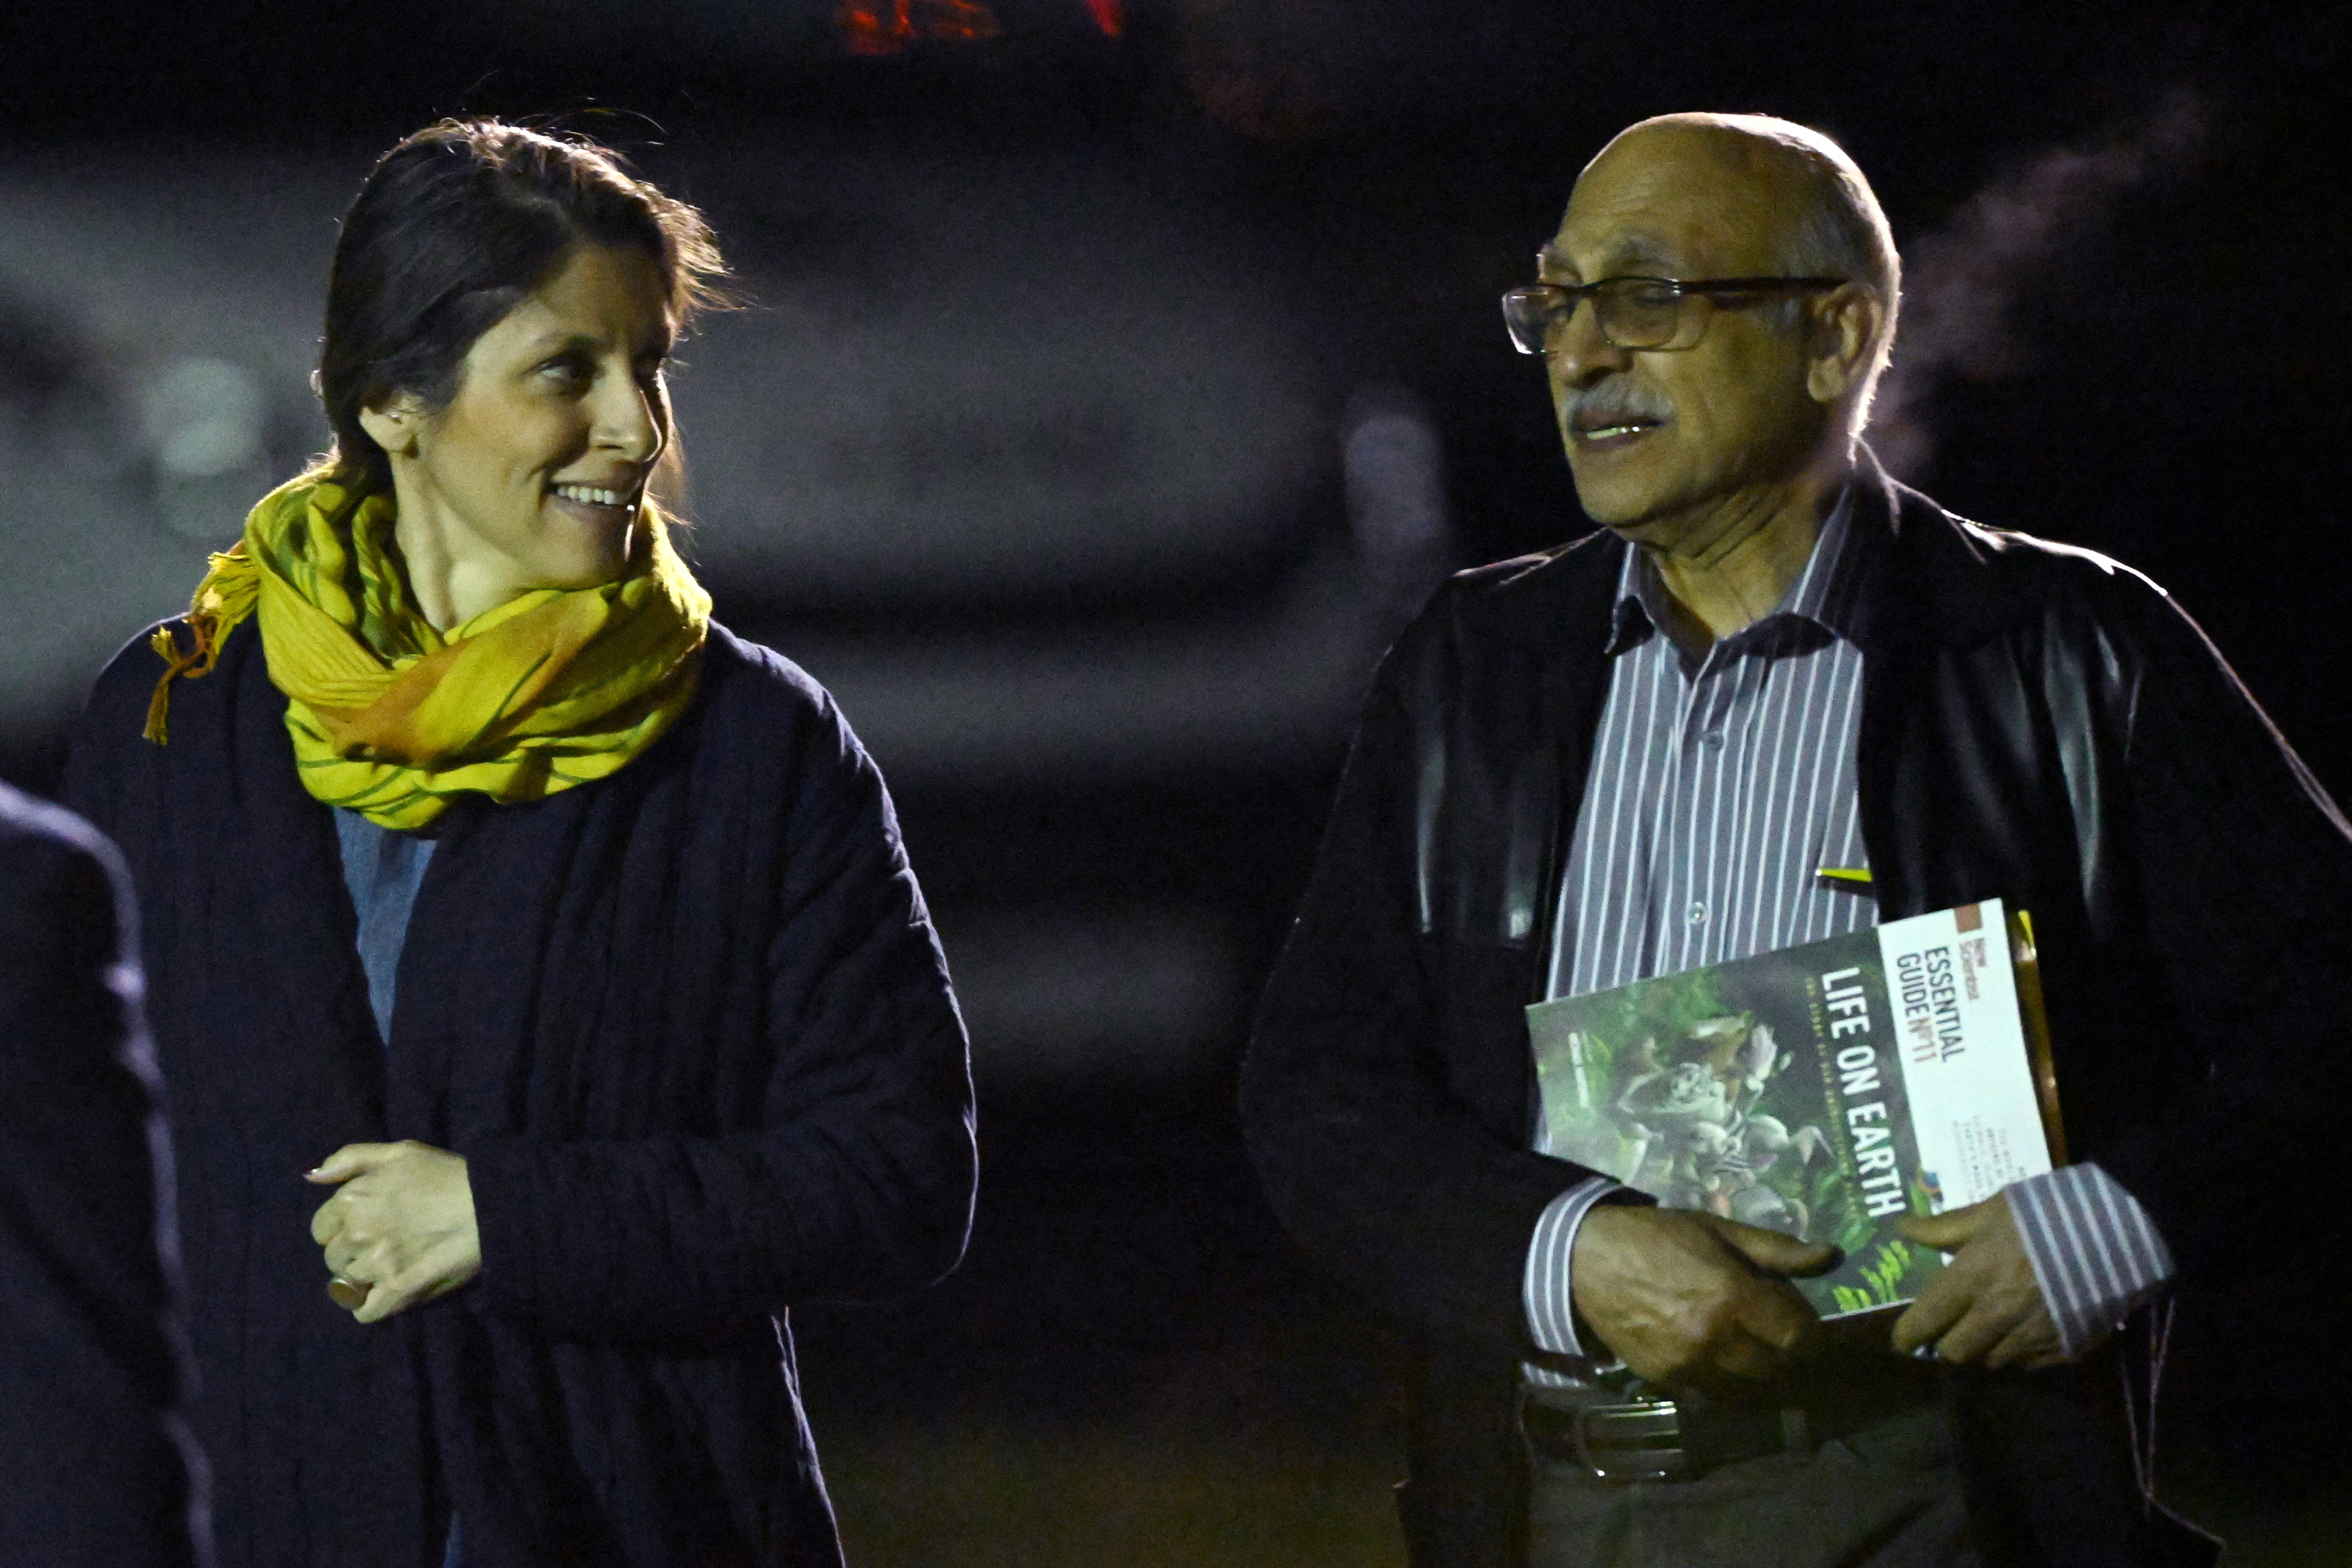 British-Iranian aid worker Nazanin Zaghari-Ratcliffe and dual national Anoosheh Ashoori land back in Britain